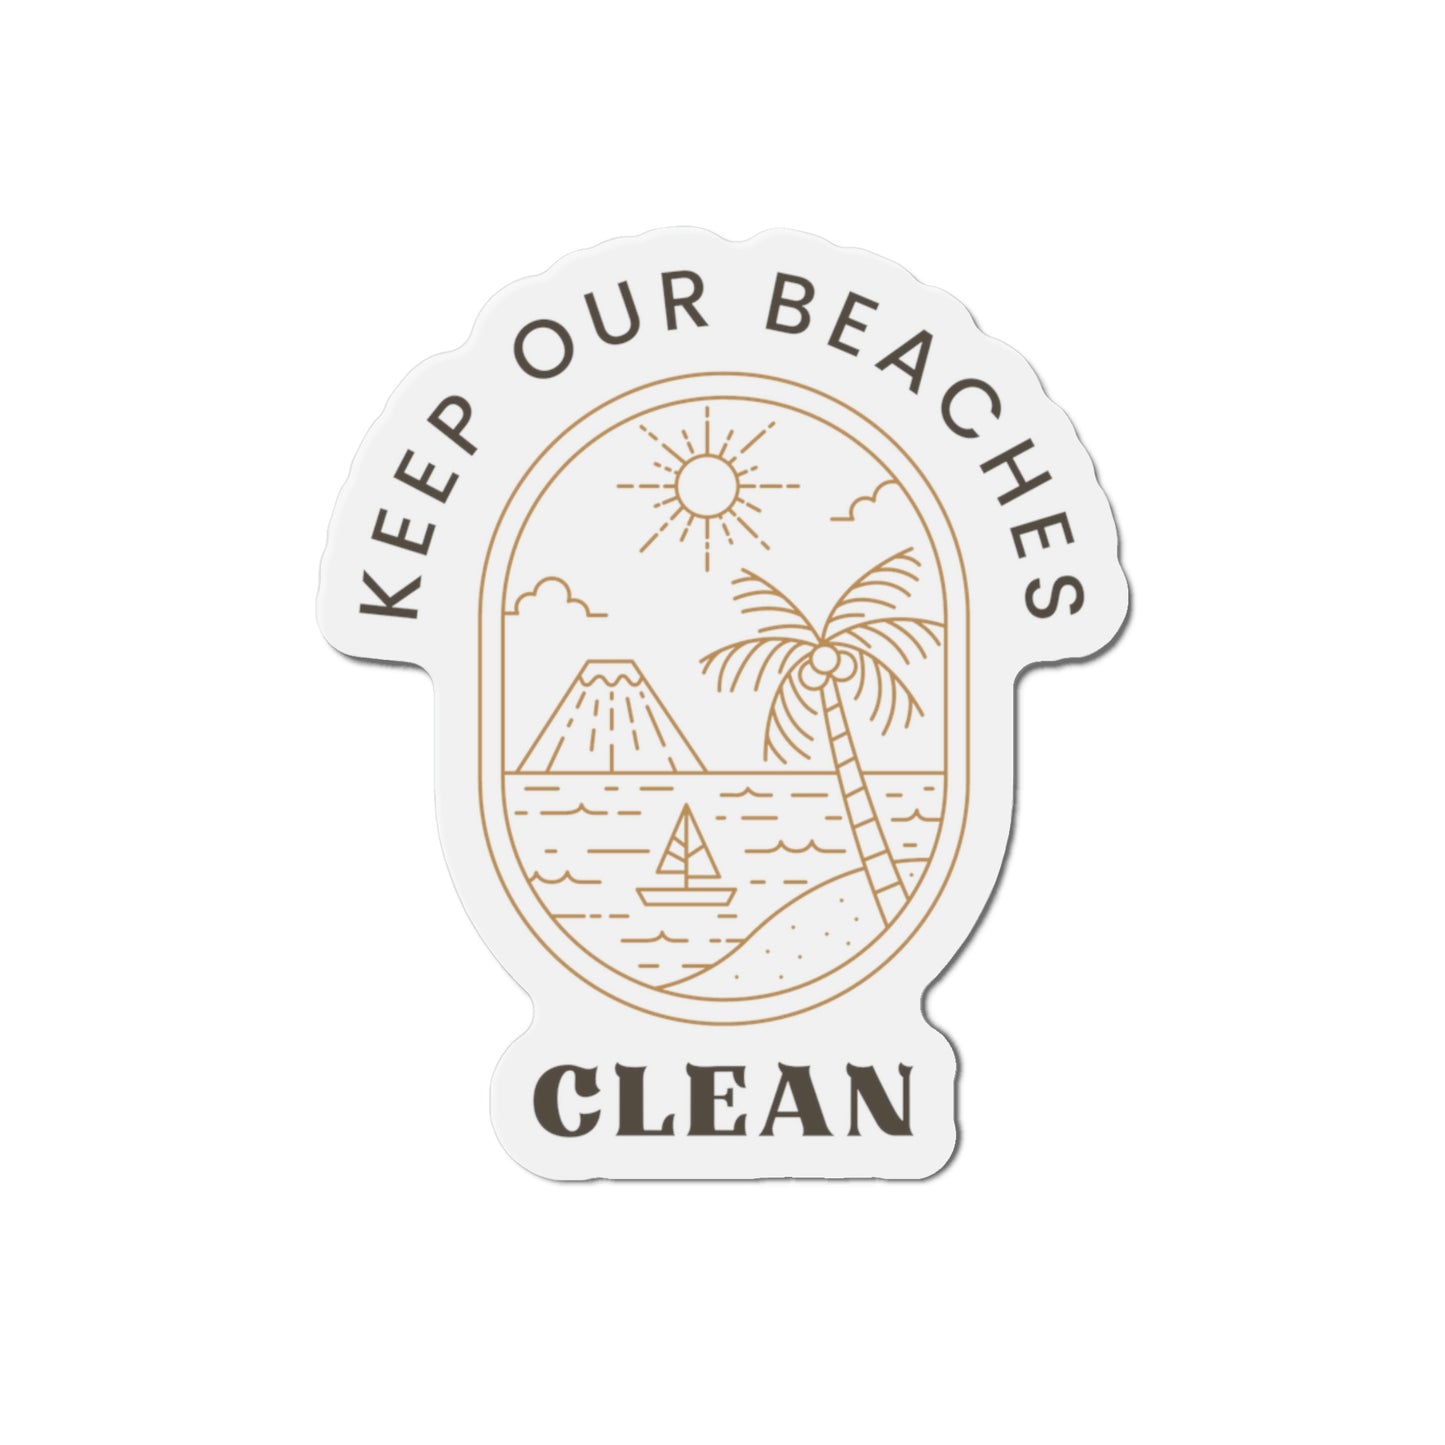 Clean Beaches Magnets